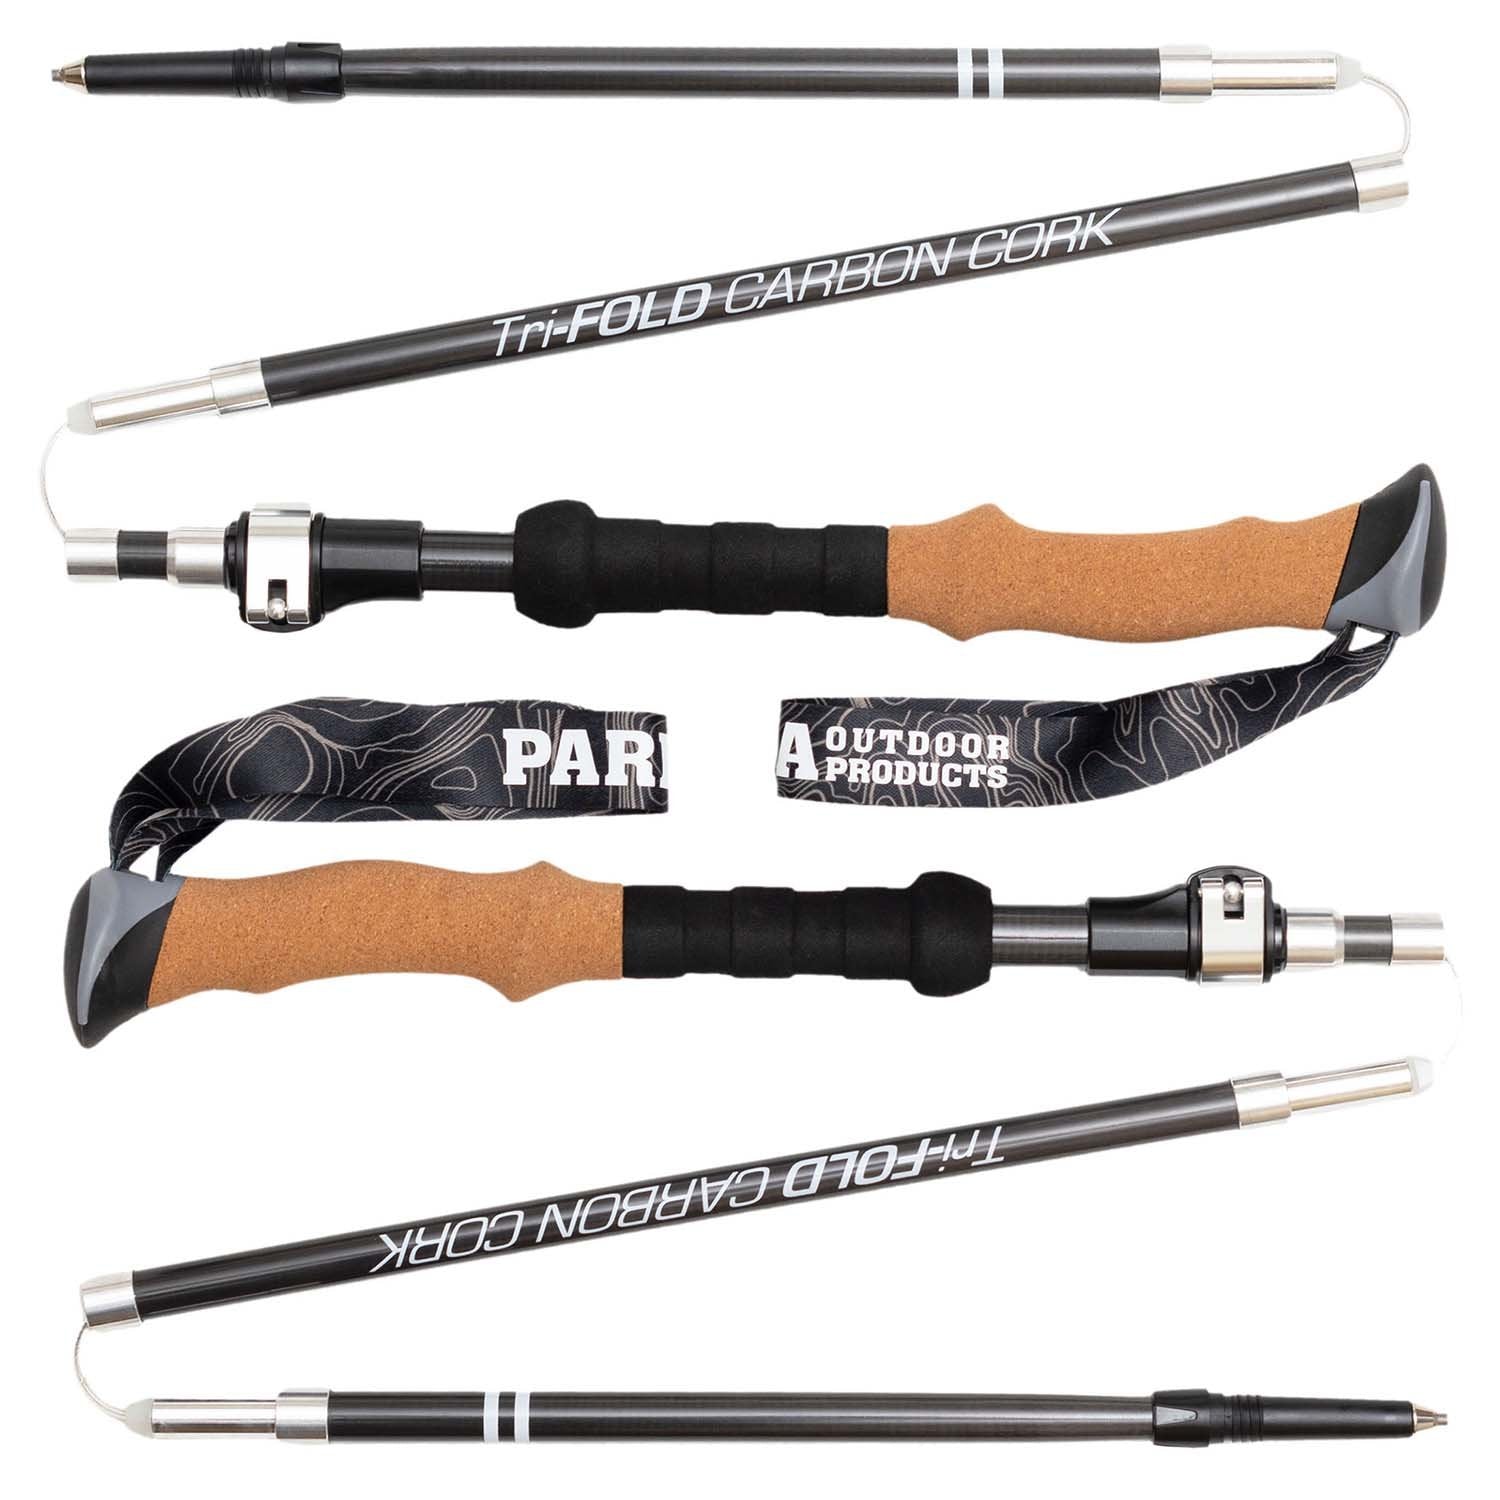 Hiking Poles | Tri-Fold Carbon Cork Trekking Poles - Paria Outdoor Products, Black - 120 cm (115 - 135)